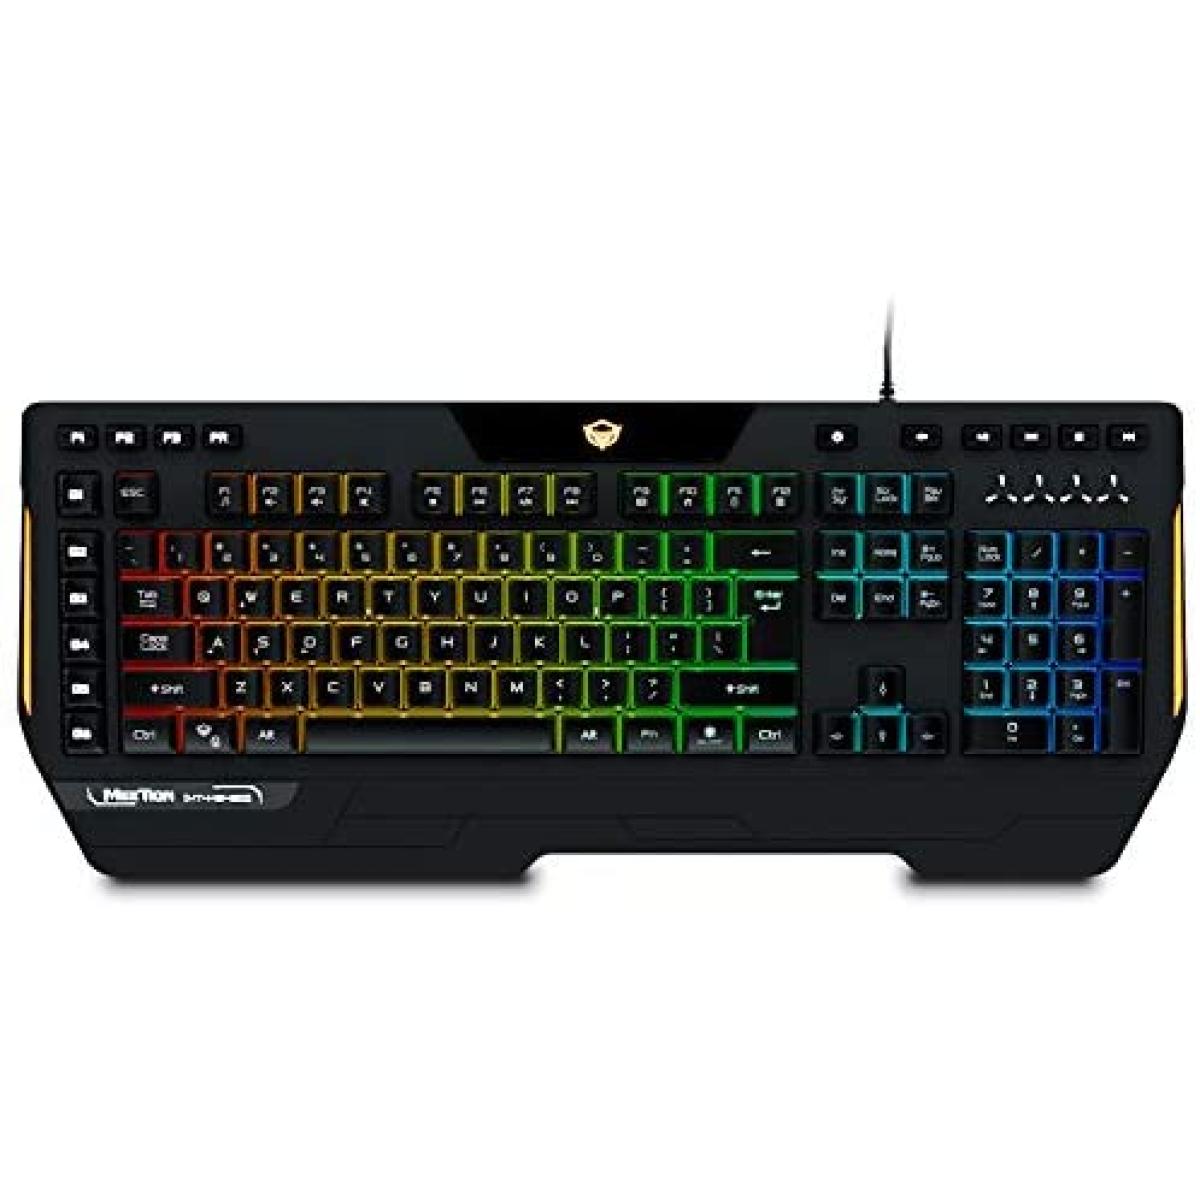 MeeTion Custom Macro Pro Membrane Gaming Keyboard